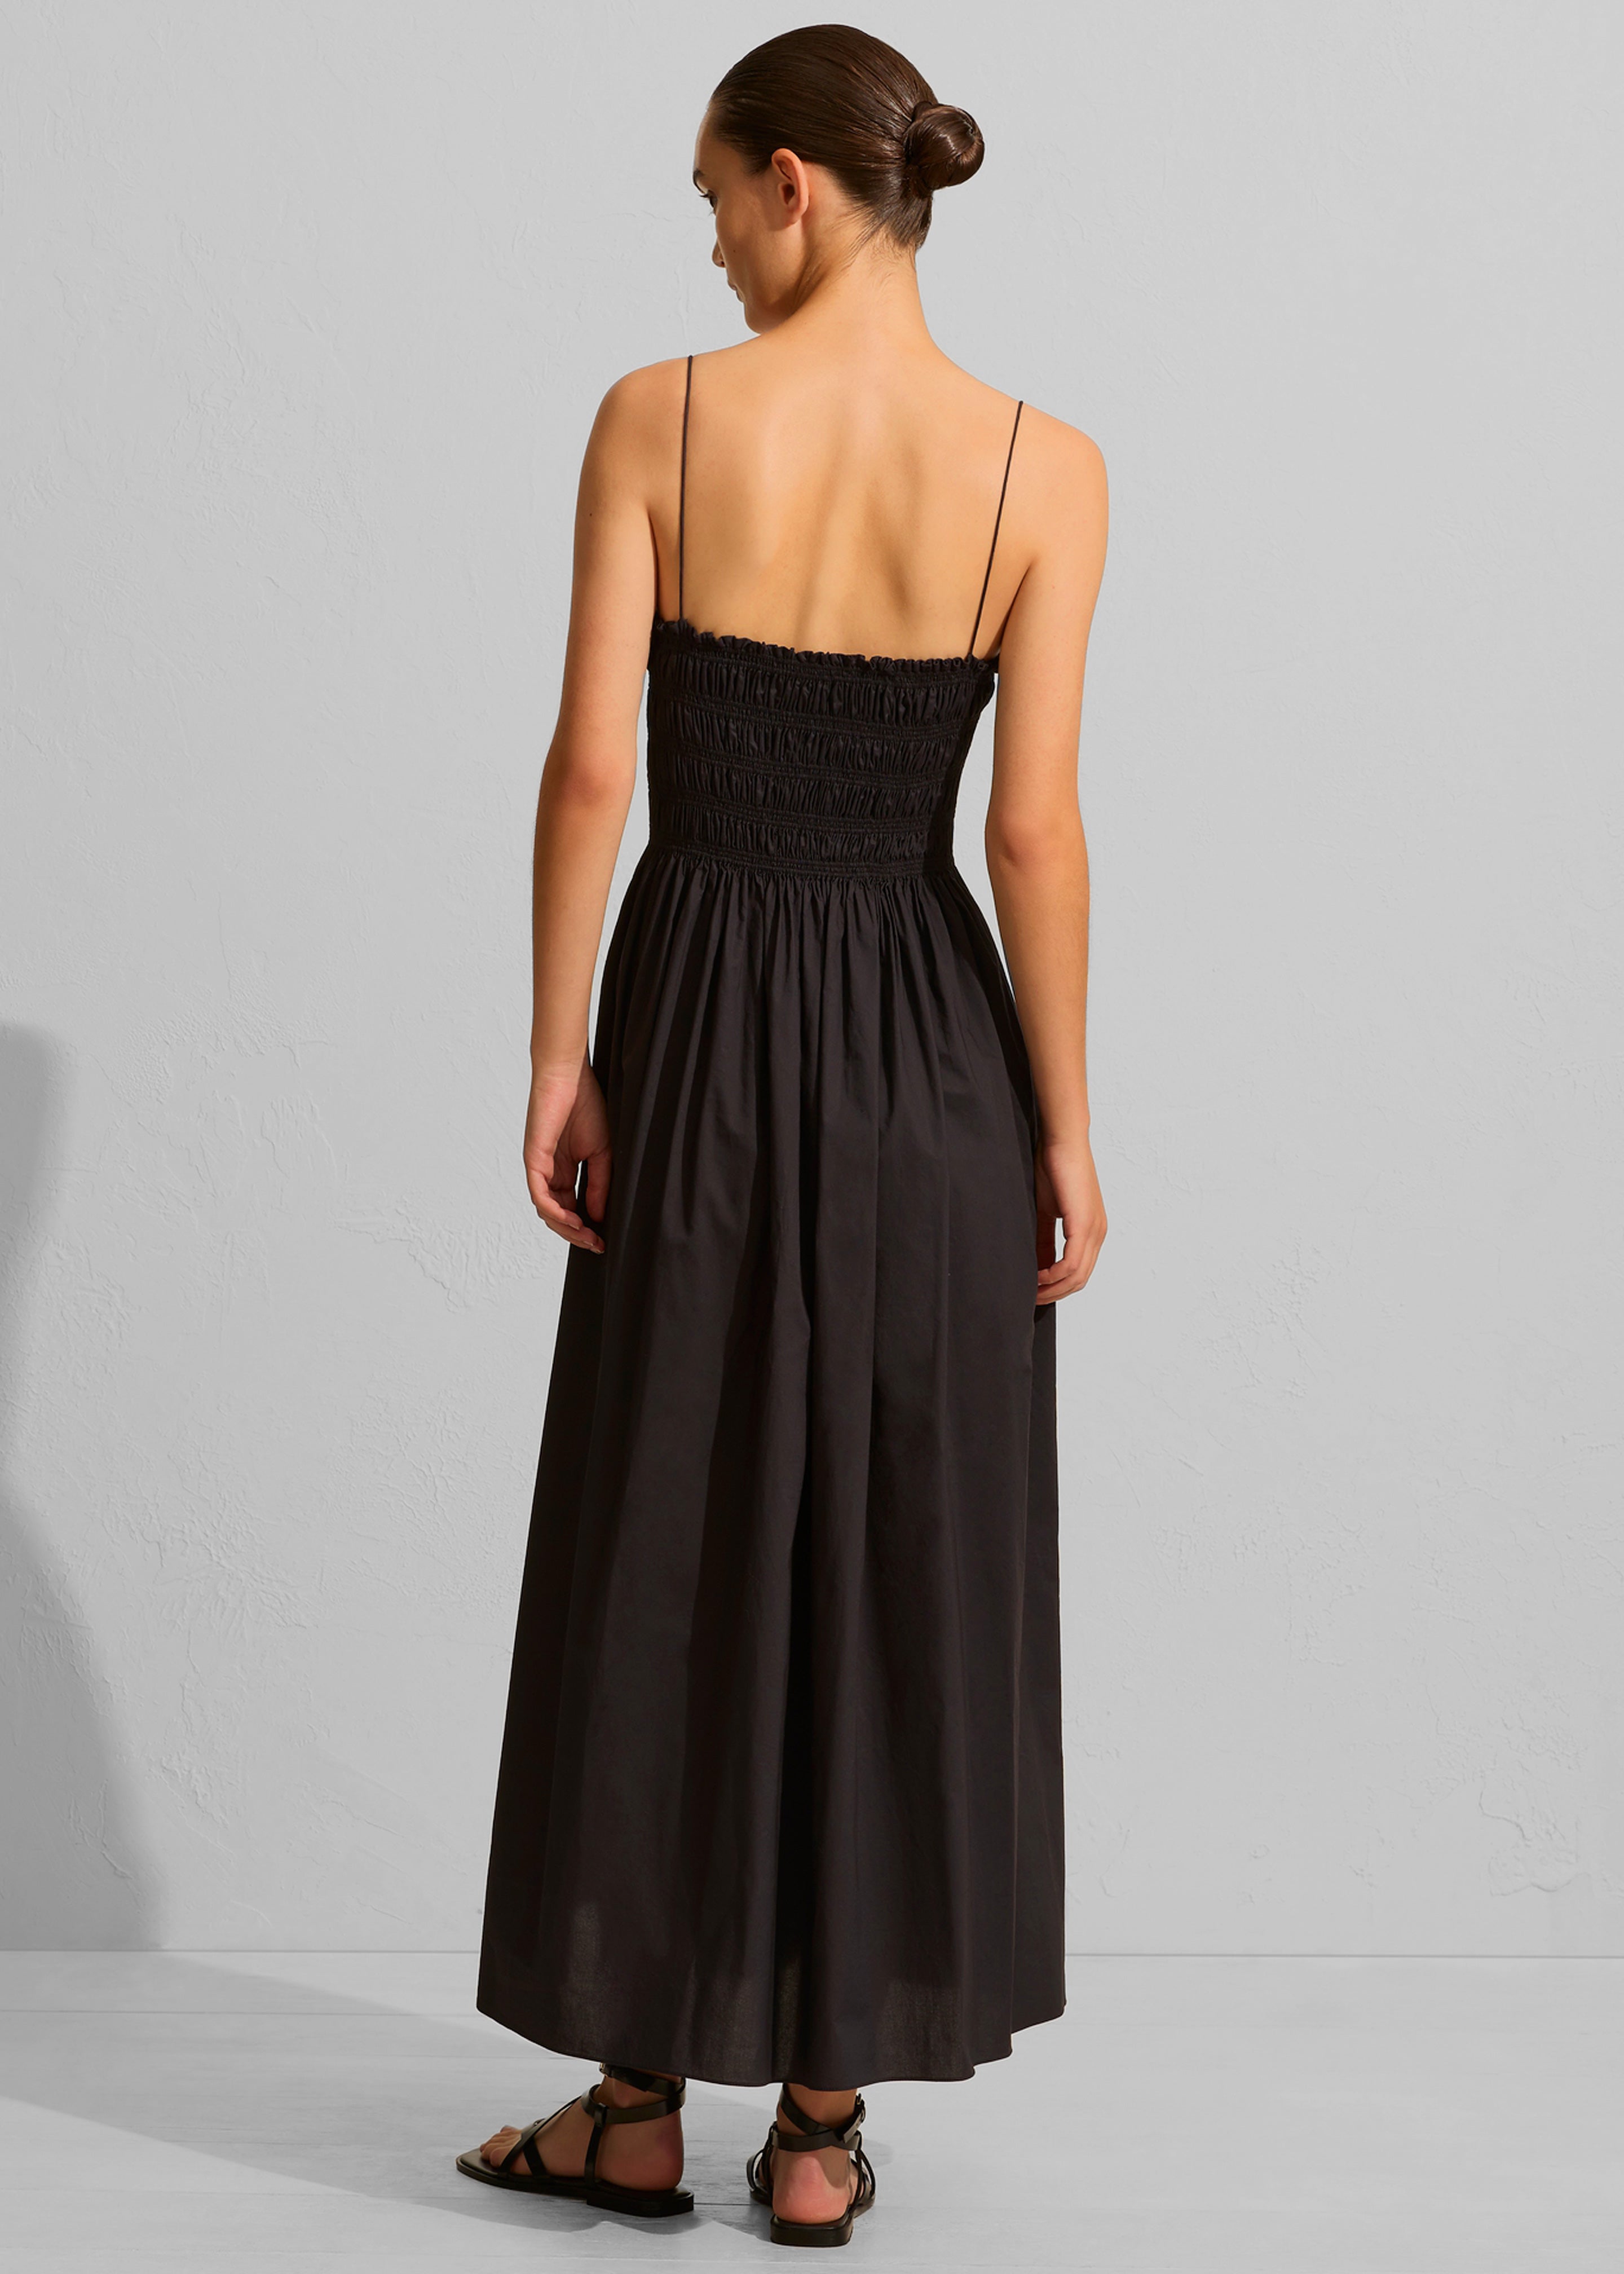 Matteau Shirred Bodice Dress - Black - 4